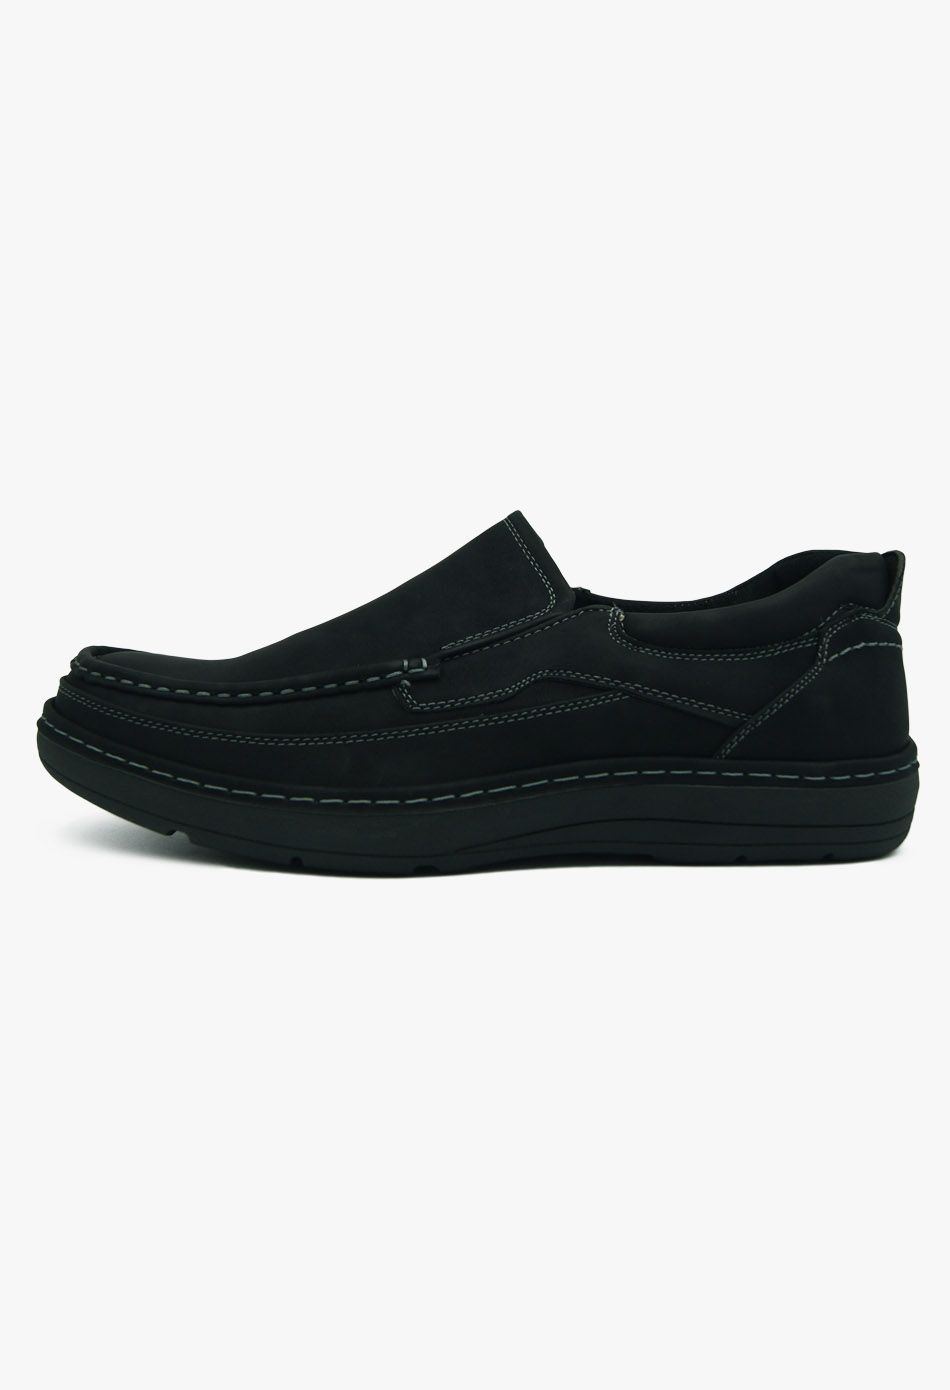 Suede Ανδρικά Boat Shoes σε Μαύρο Χρώμα / A86-Black ΑΝΔΡΙΚΑ ΠΑΠΟΥΤΣΙΑ joya.gr